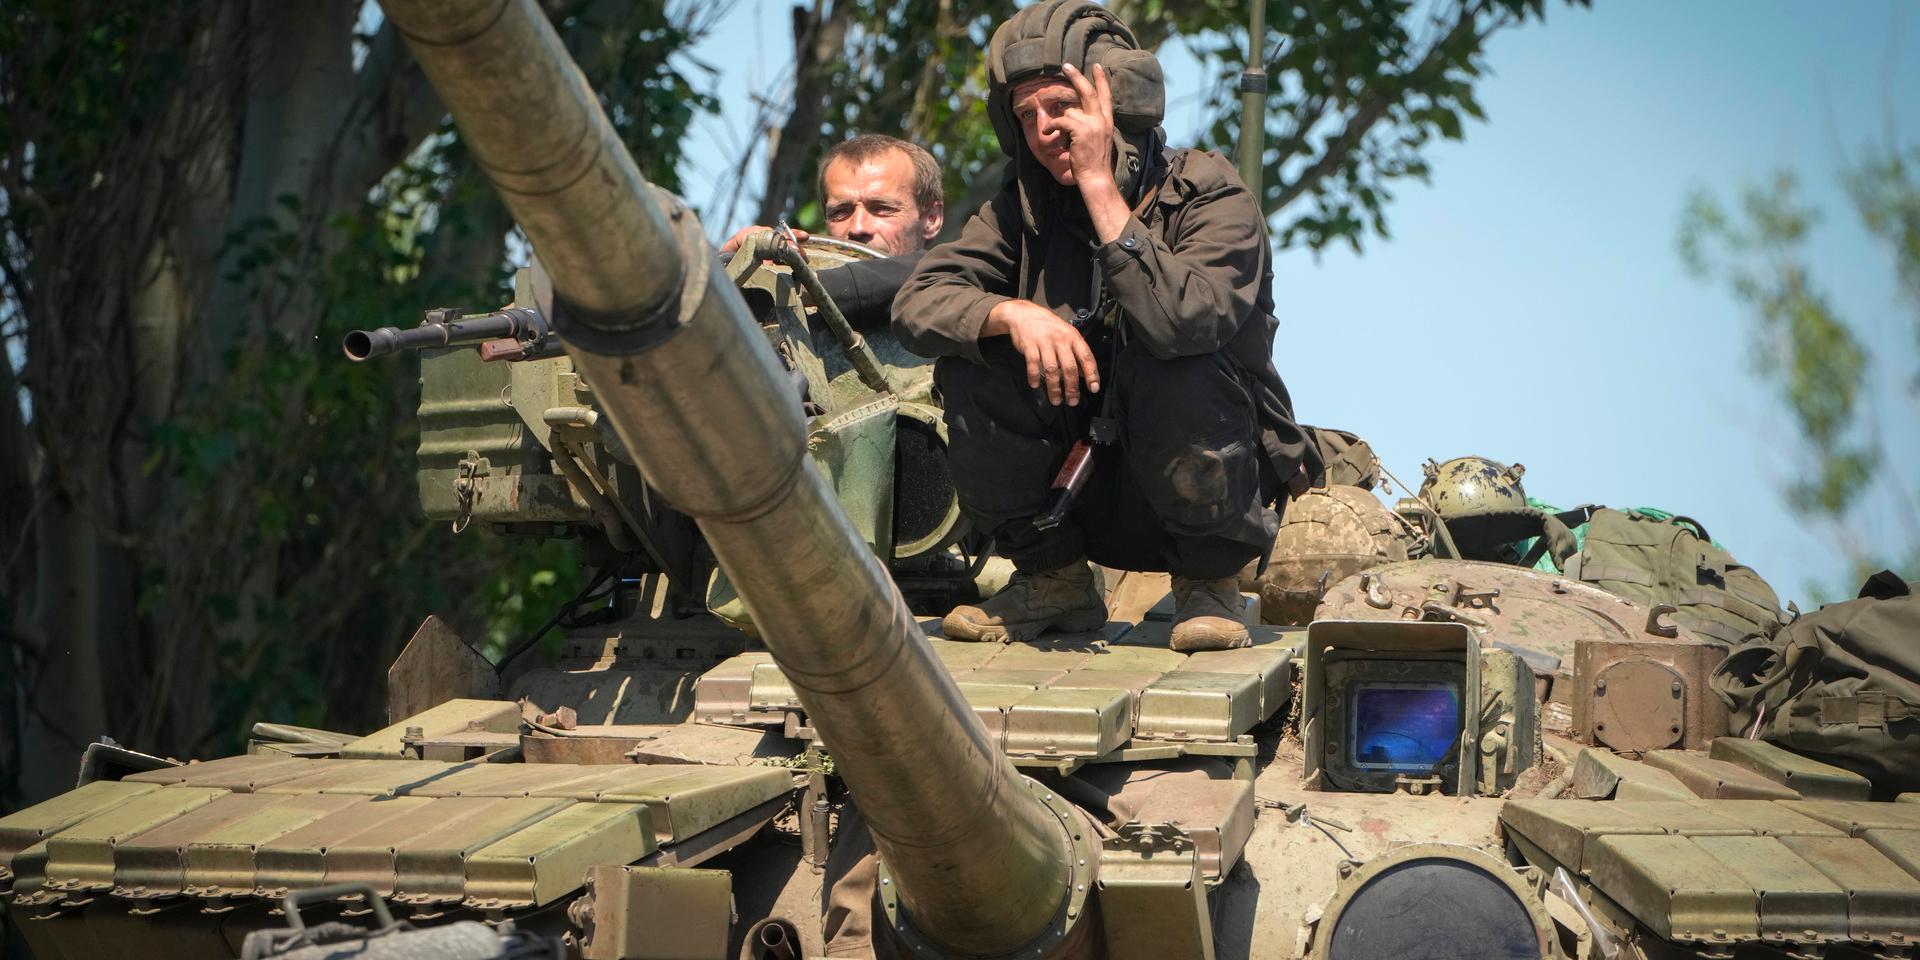 Ukrainska soldater på en stridsvagn i Donetsk i östra delen av landet. Arkivbild.